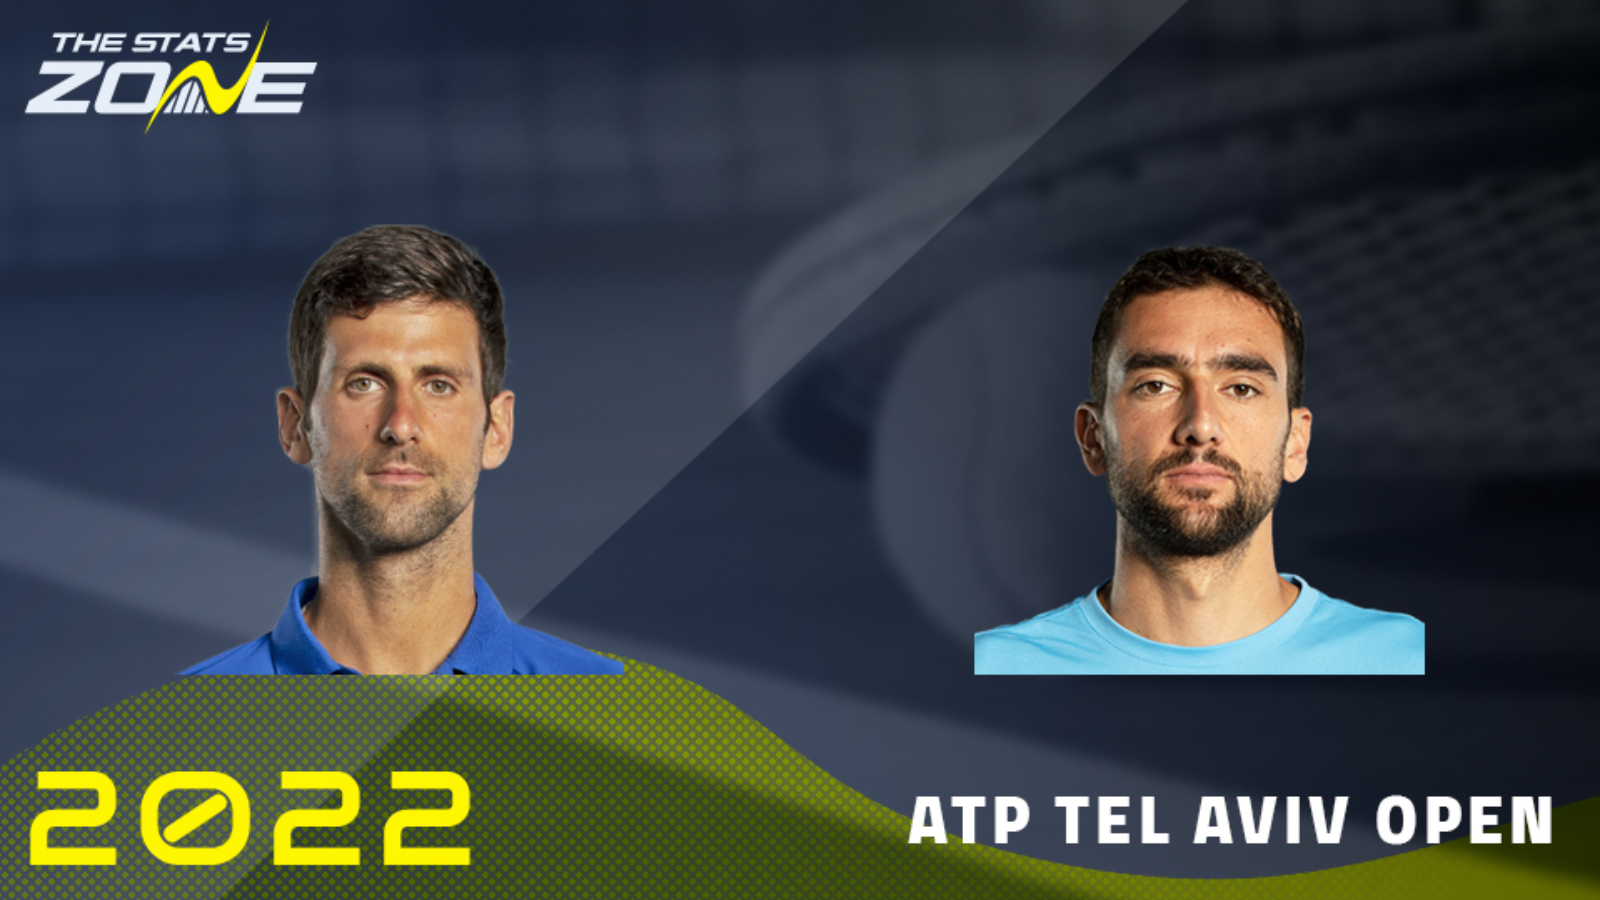 Novak Djokovic vs Marin Cilic – Final